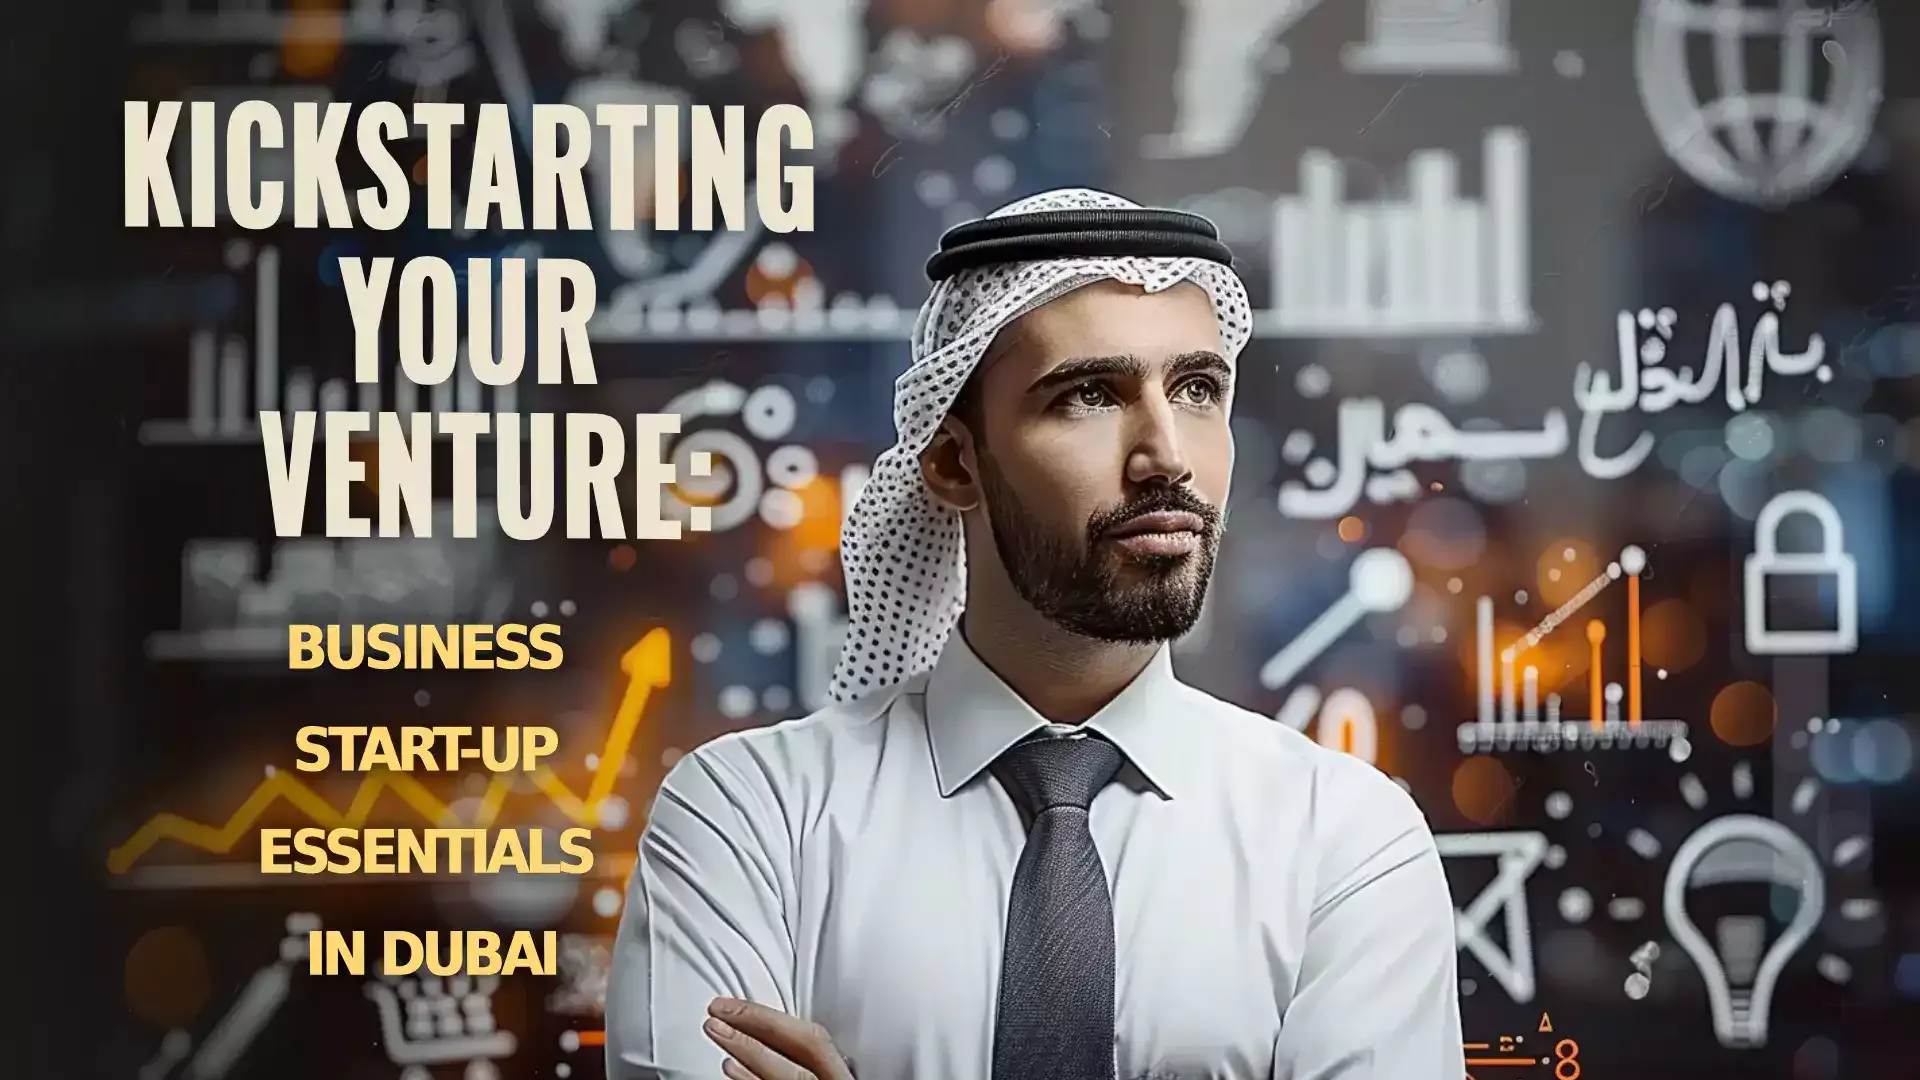 Dynamic Business Environment: Operating in Dubai